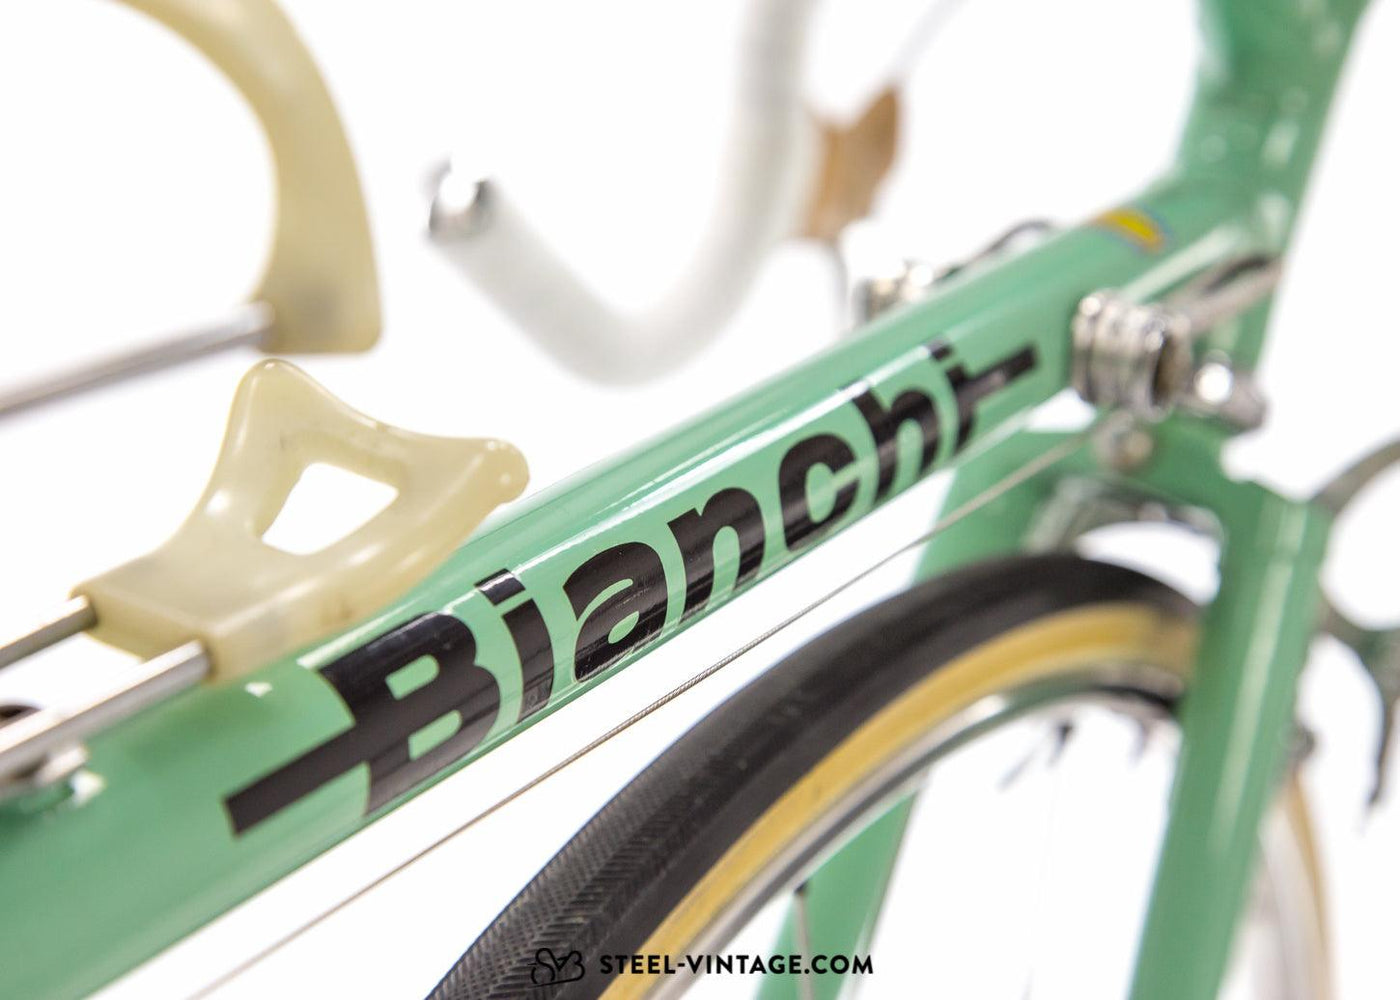 Bianchi Specialissima Superleggera Road Bike 1977 - Steel Vintage Bikes